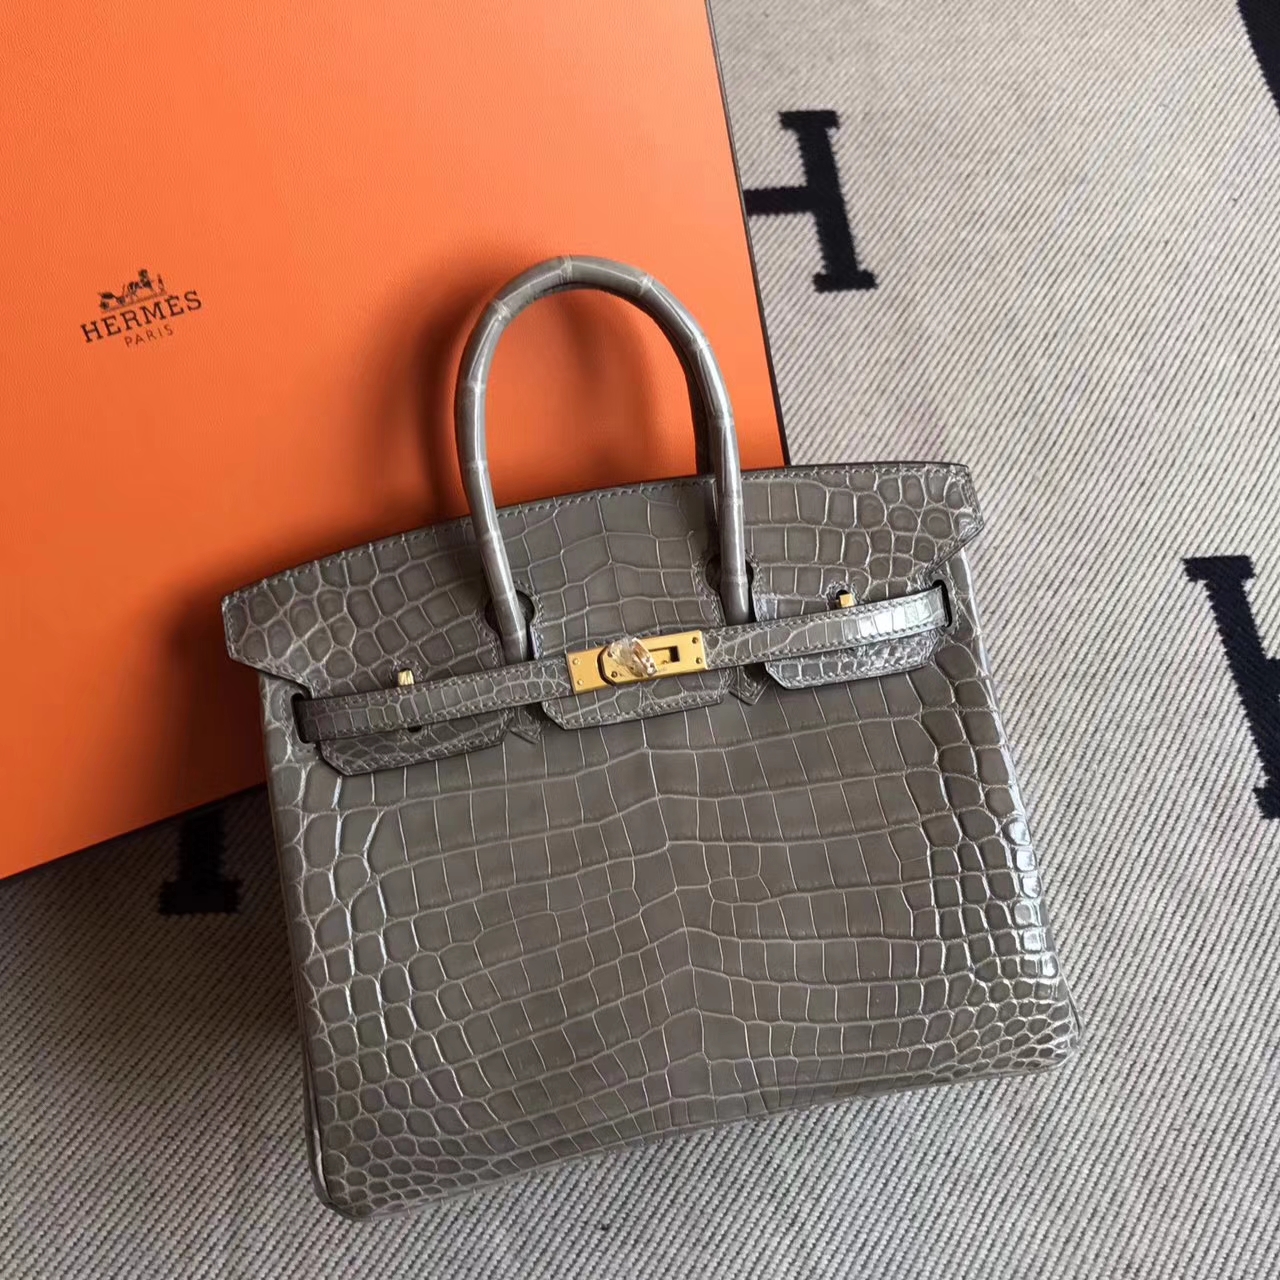 Hot Sale Hermes Crocodile Shiny Leather Birkin25cm Bag in C18 Etoupe ...